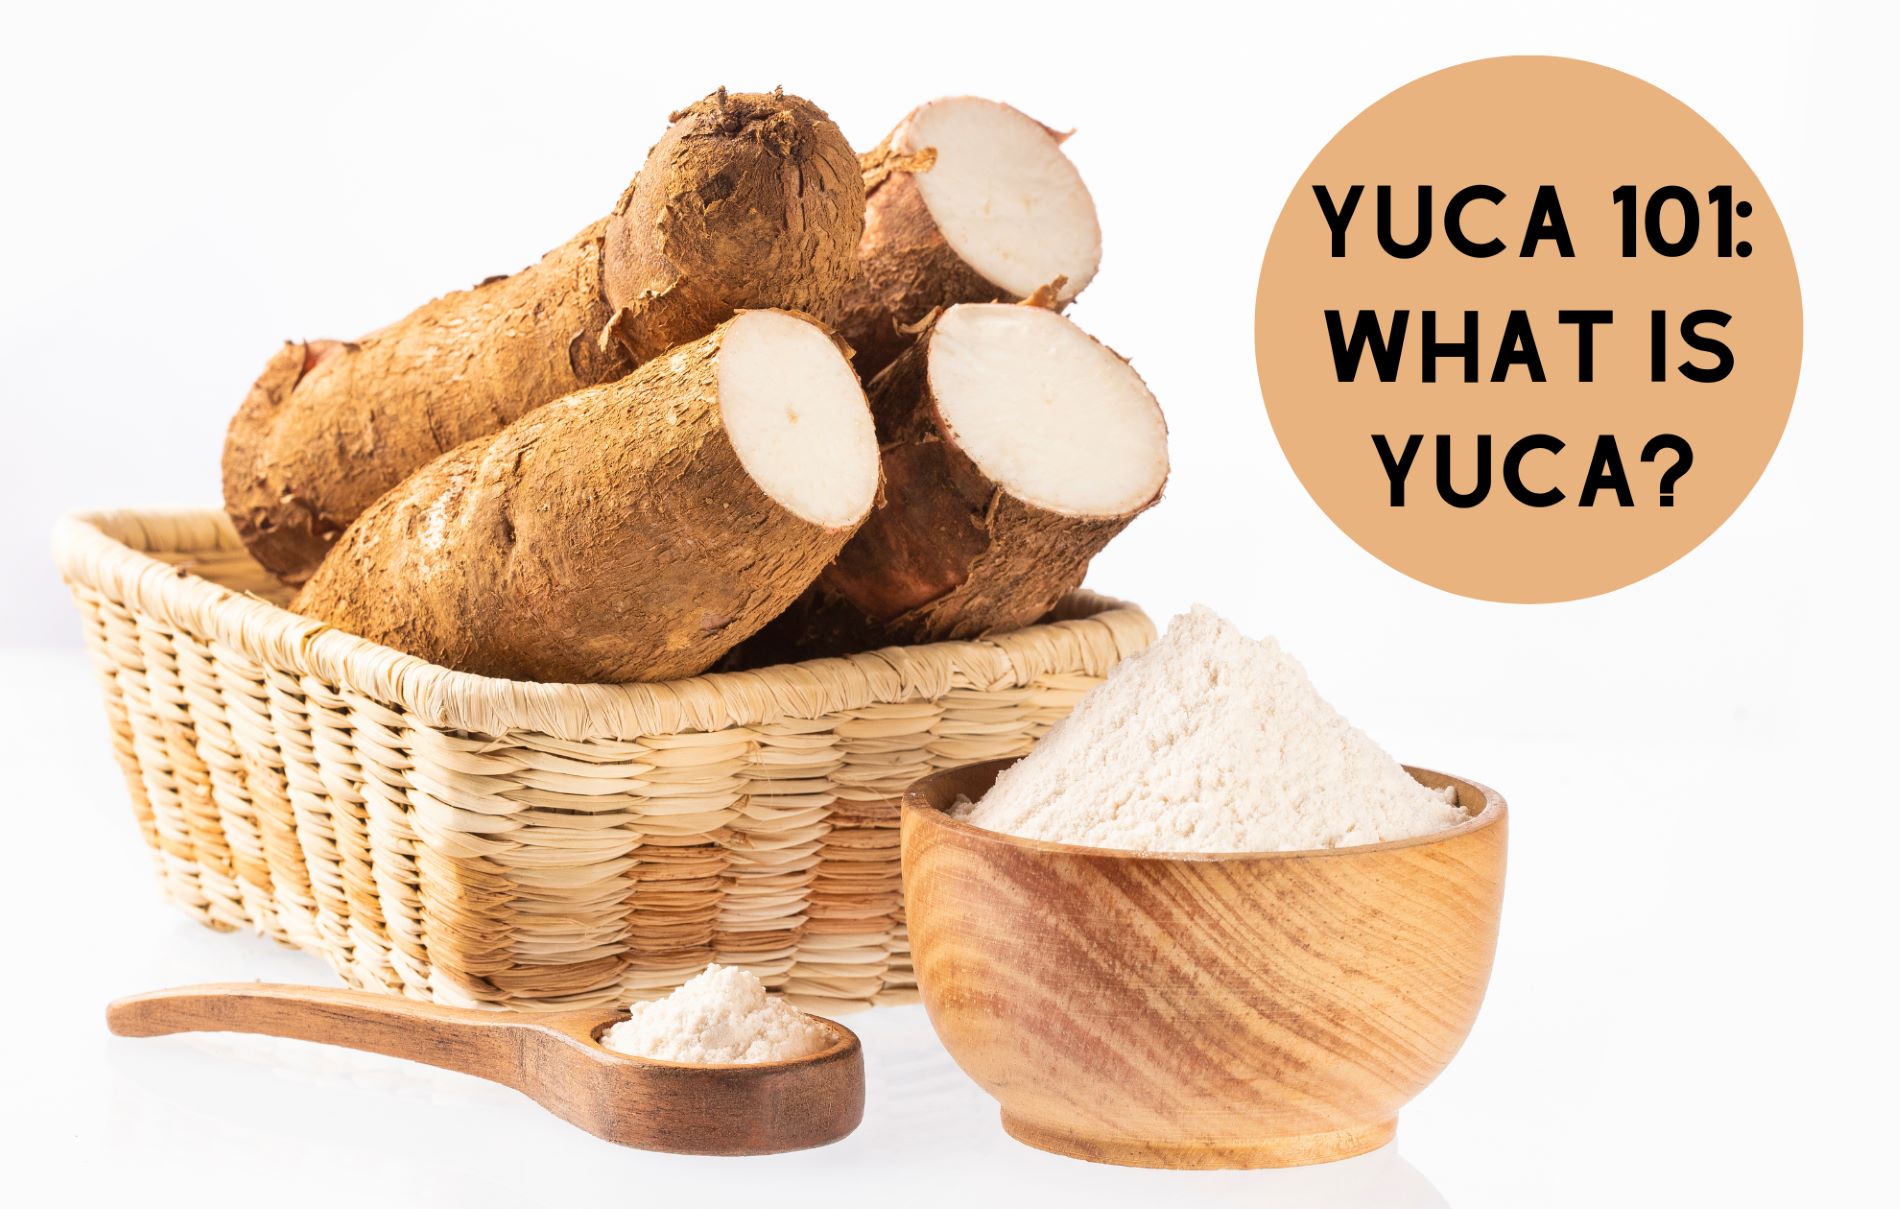 Yuca 101: What Is Yuca?